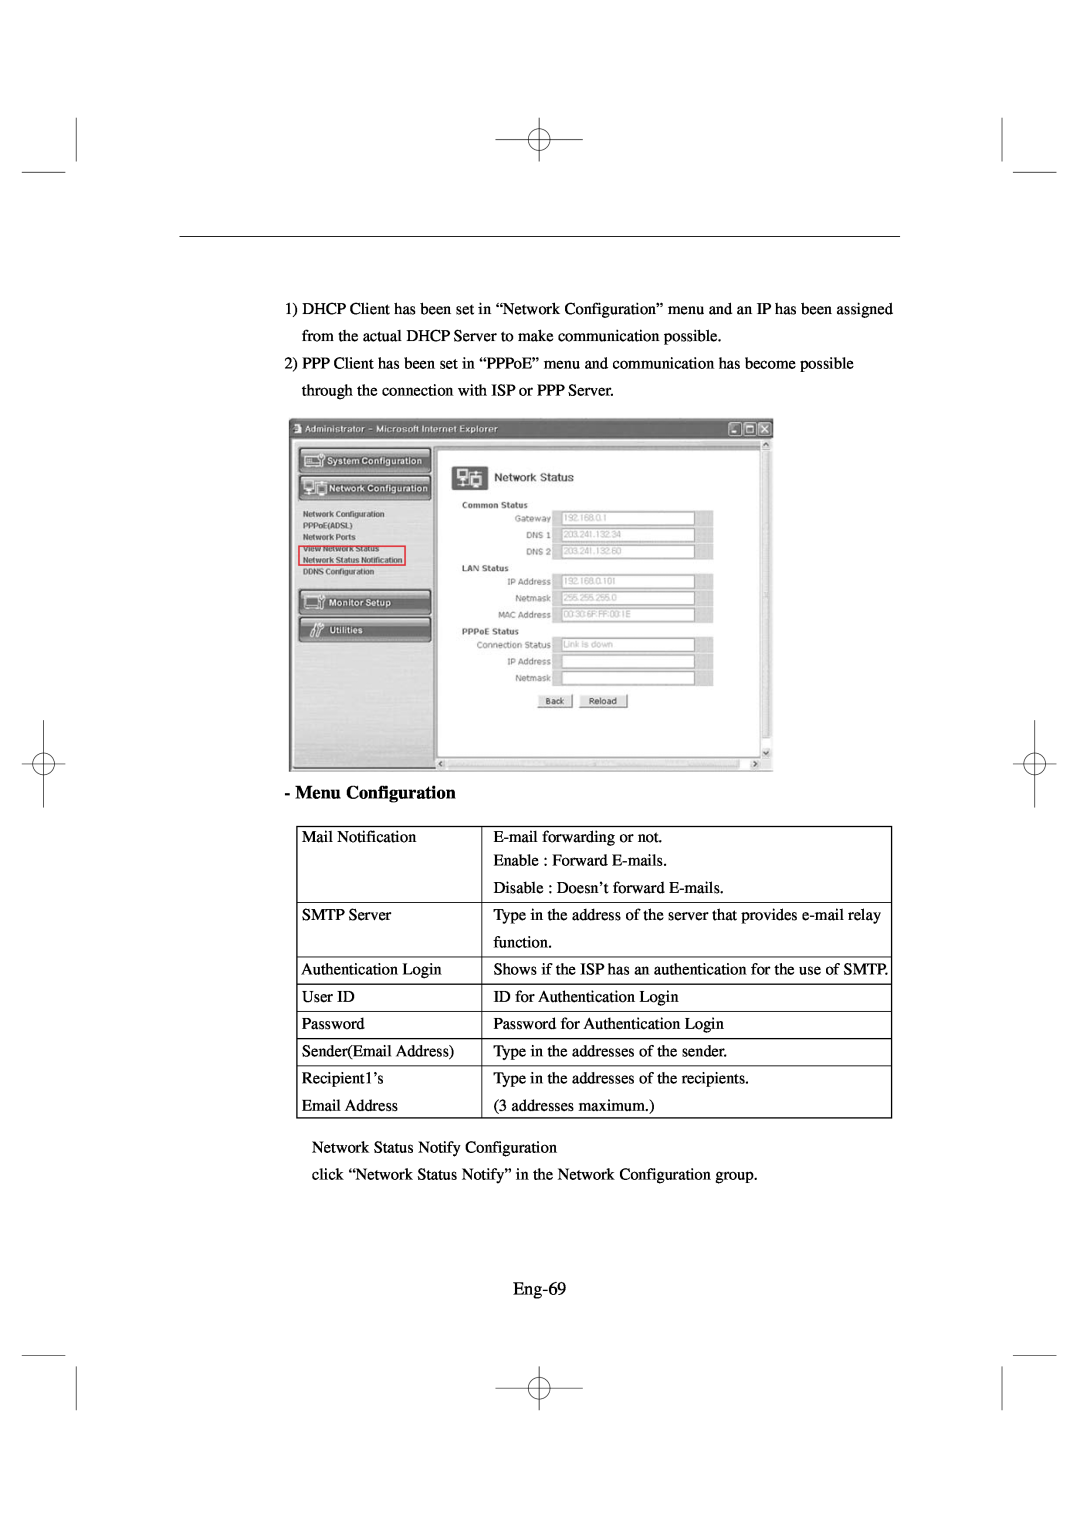 Samsung SSC17WEB manual Menu Configuration, Eng-69 